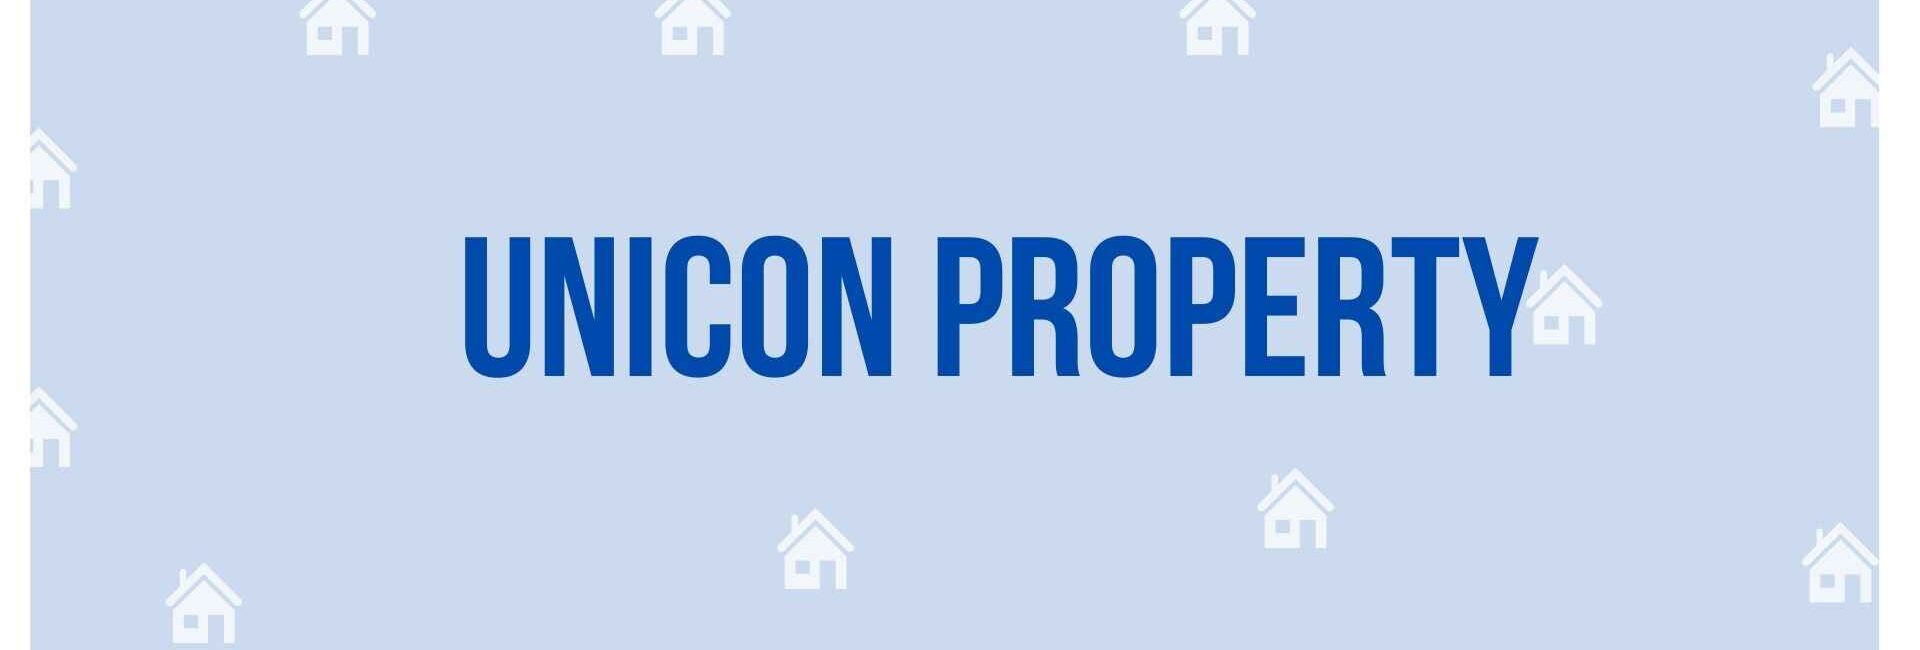 Unicon Property - Property Dealer in Noida